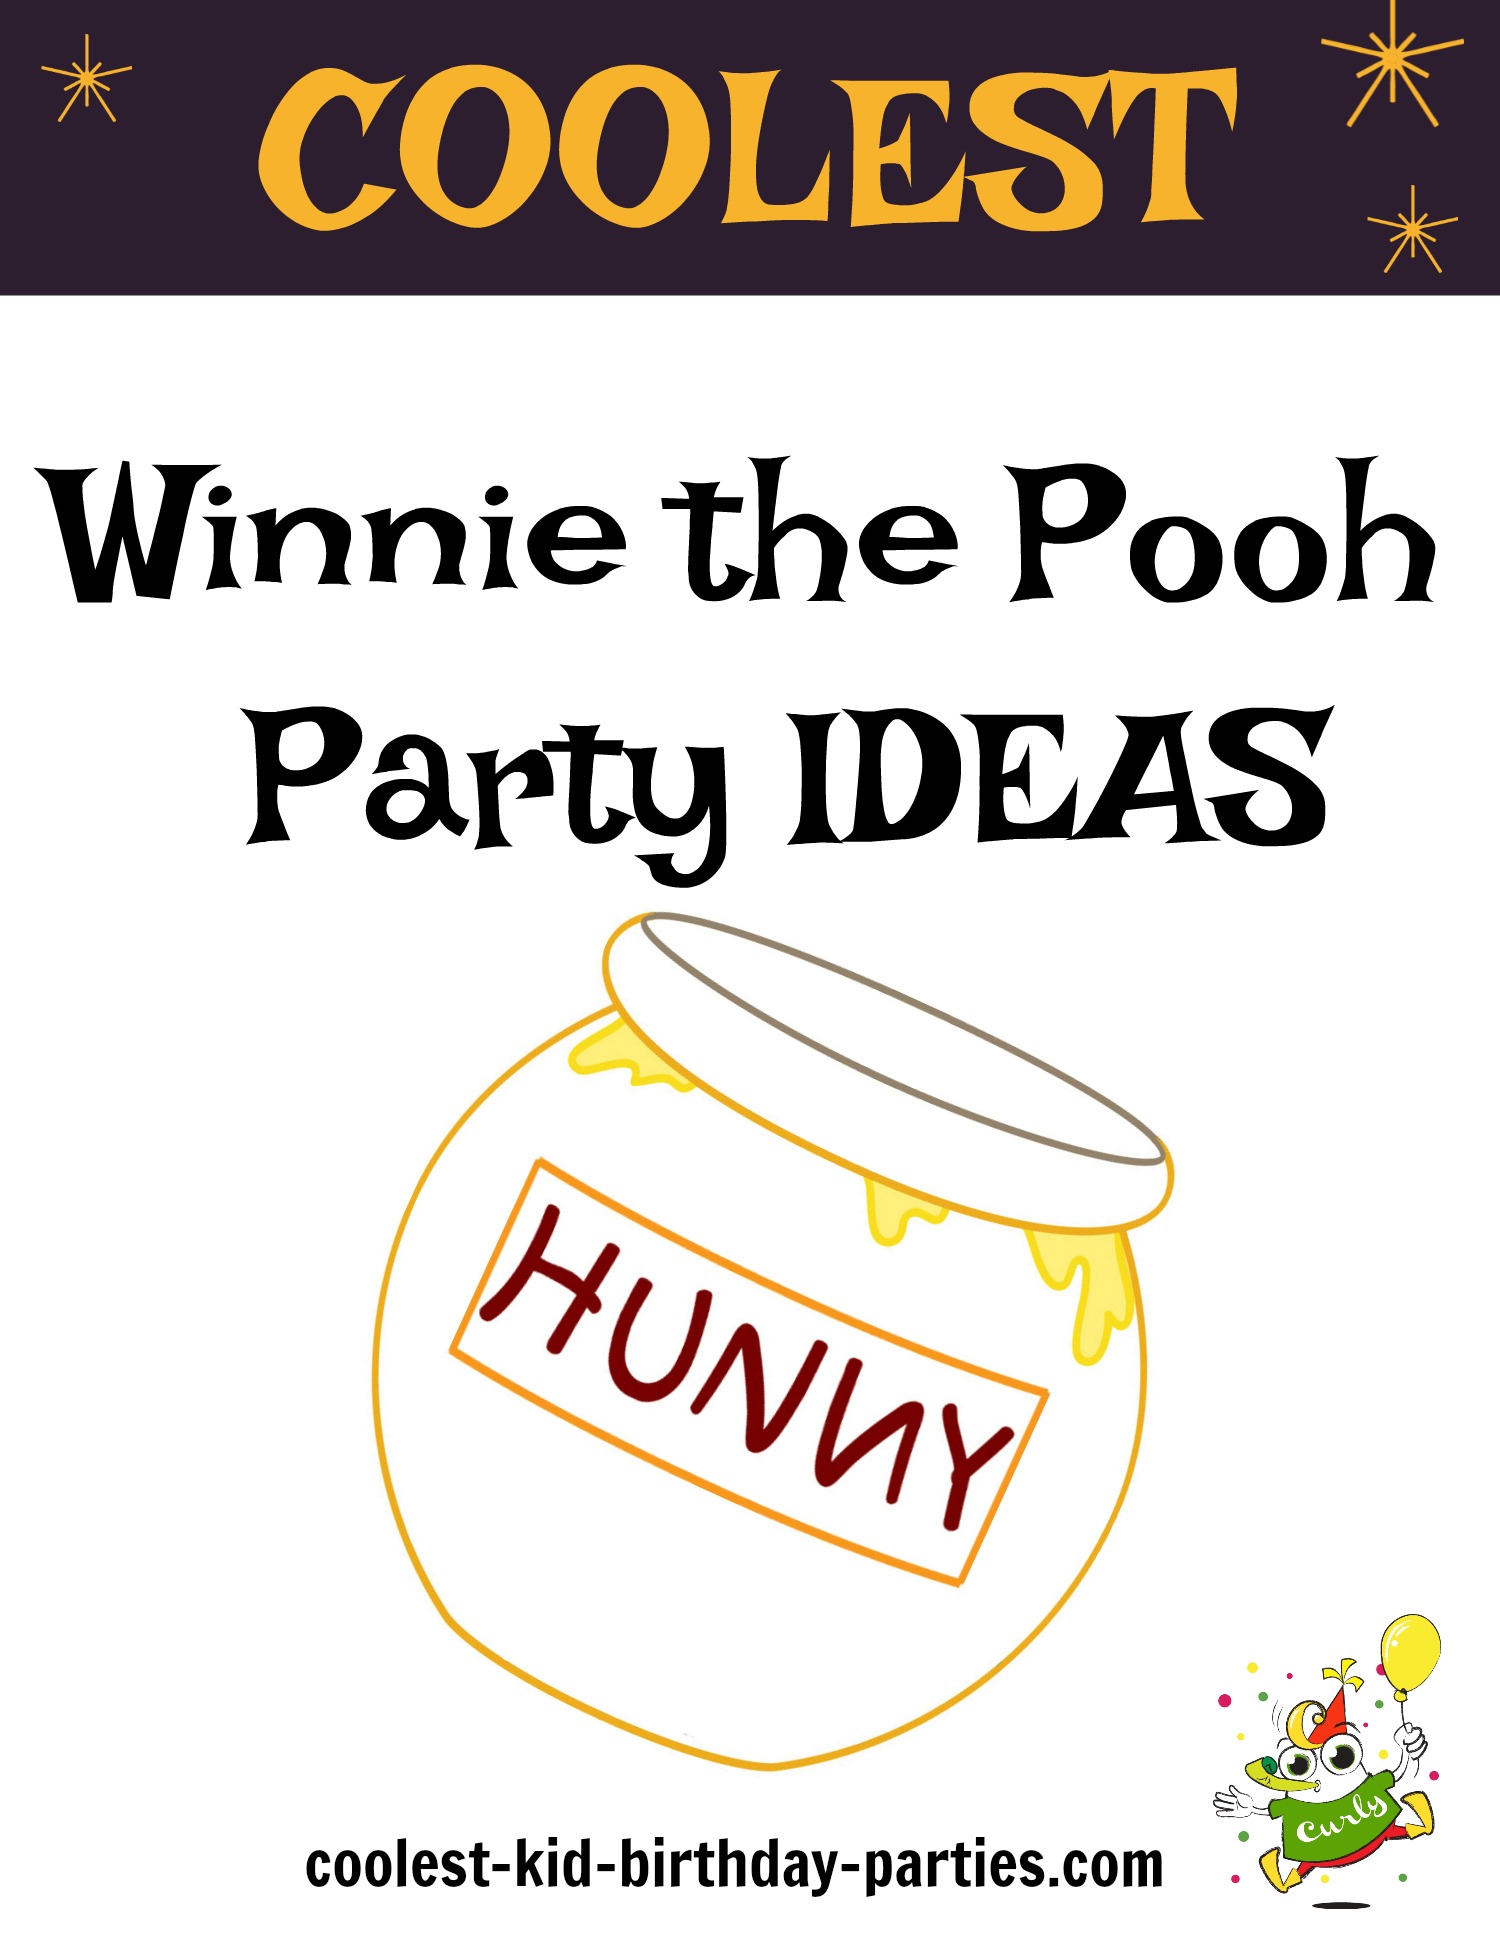 This Winnie The Pooh Honey Pot Bag Has Hunny Dripping Down